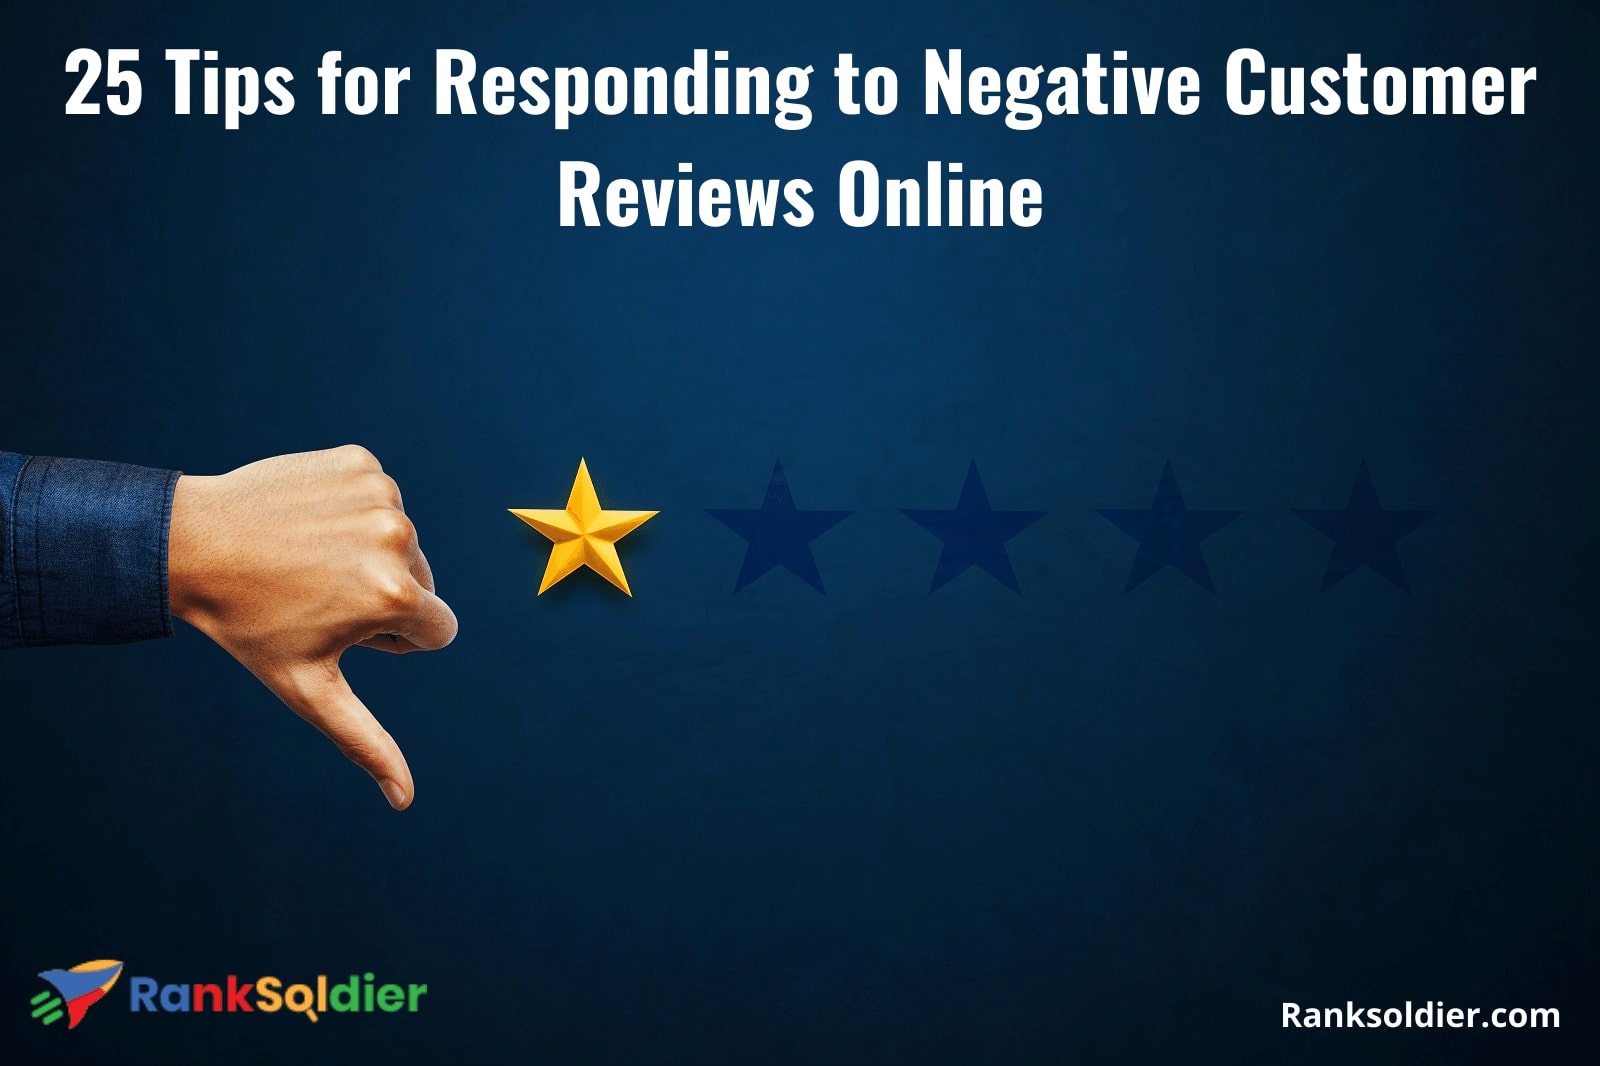 25 Tips for Responding to Negative Customer Reviews Online